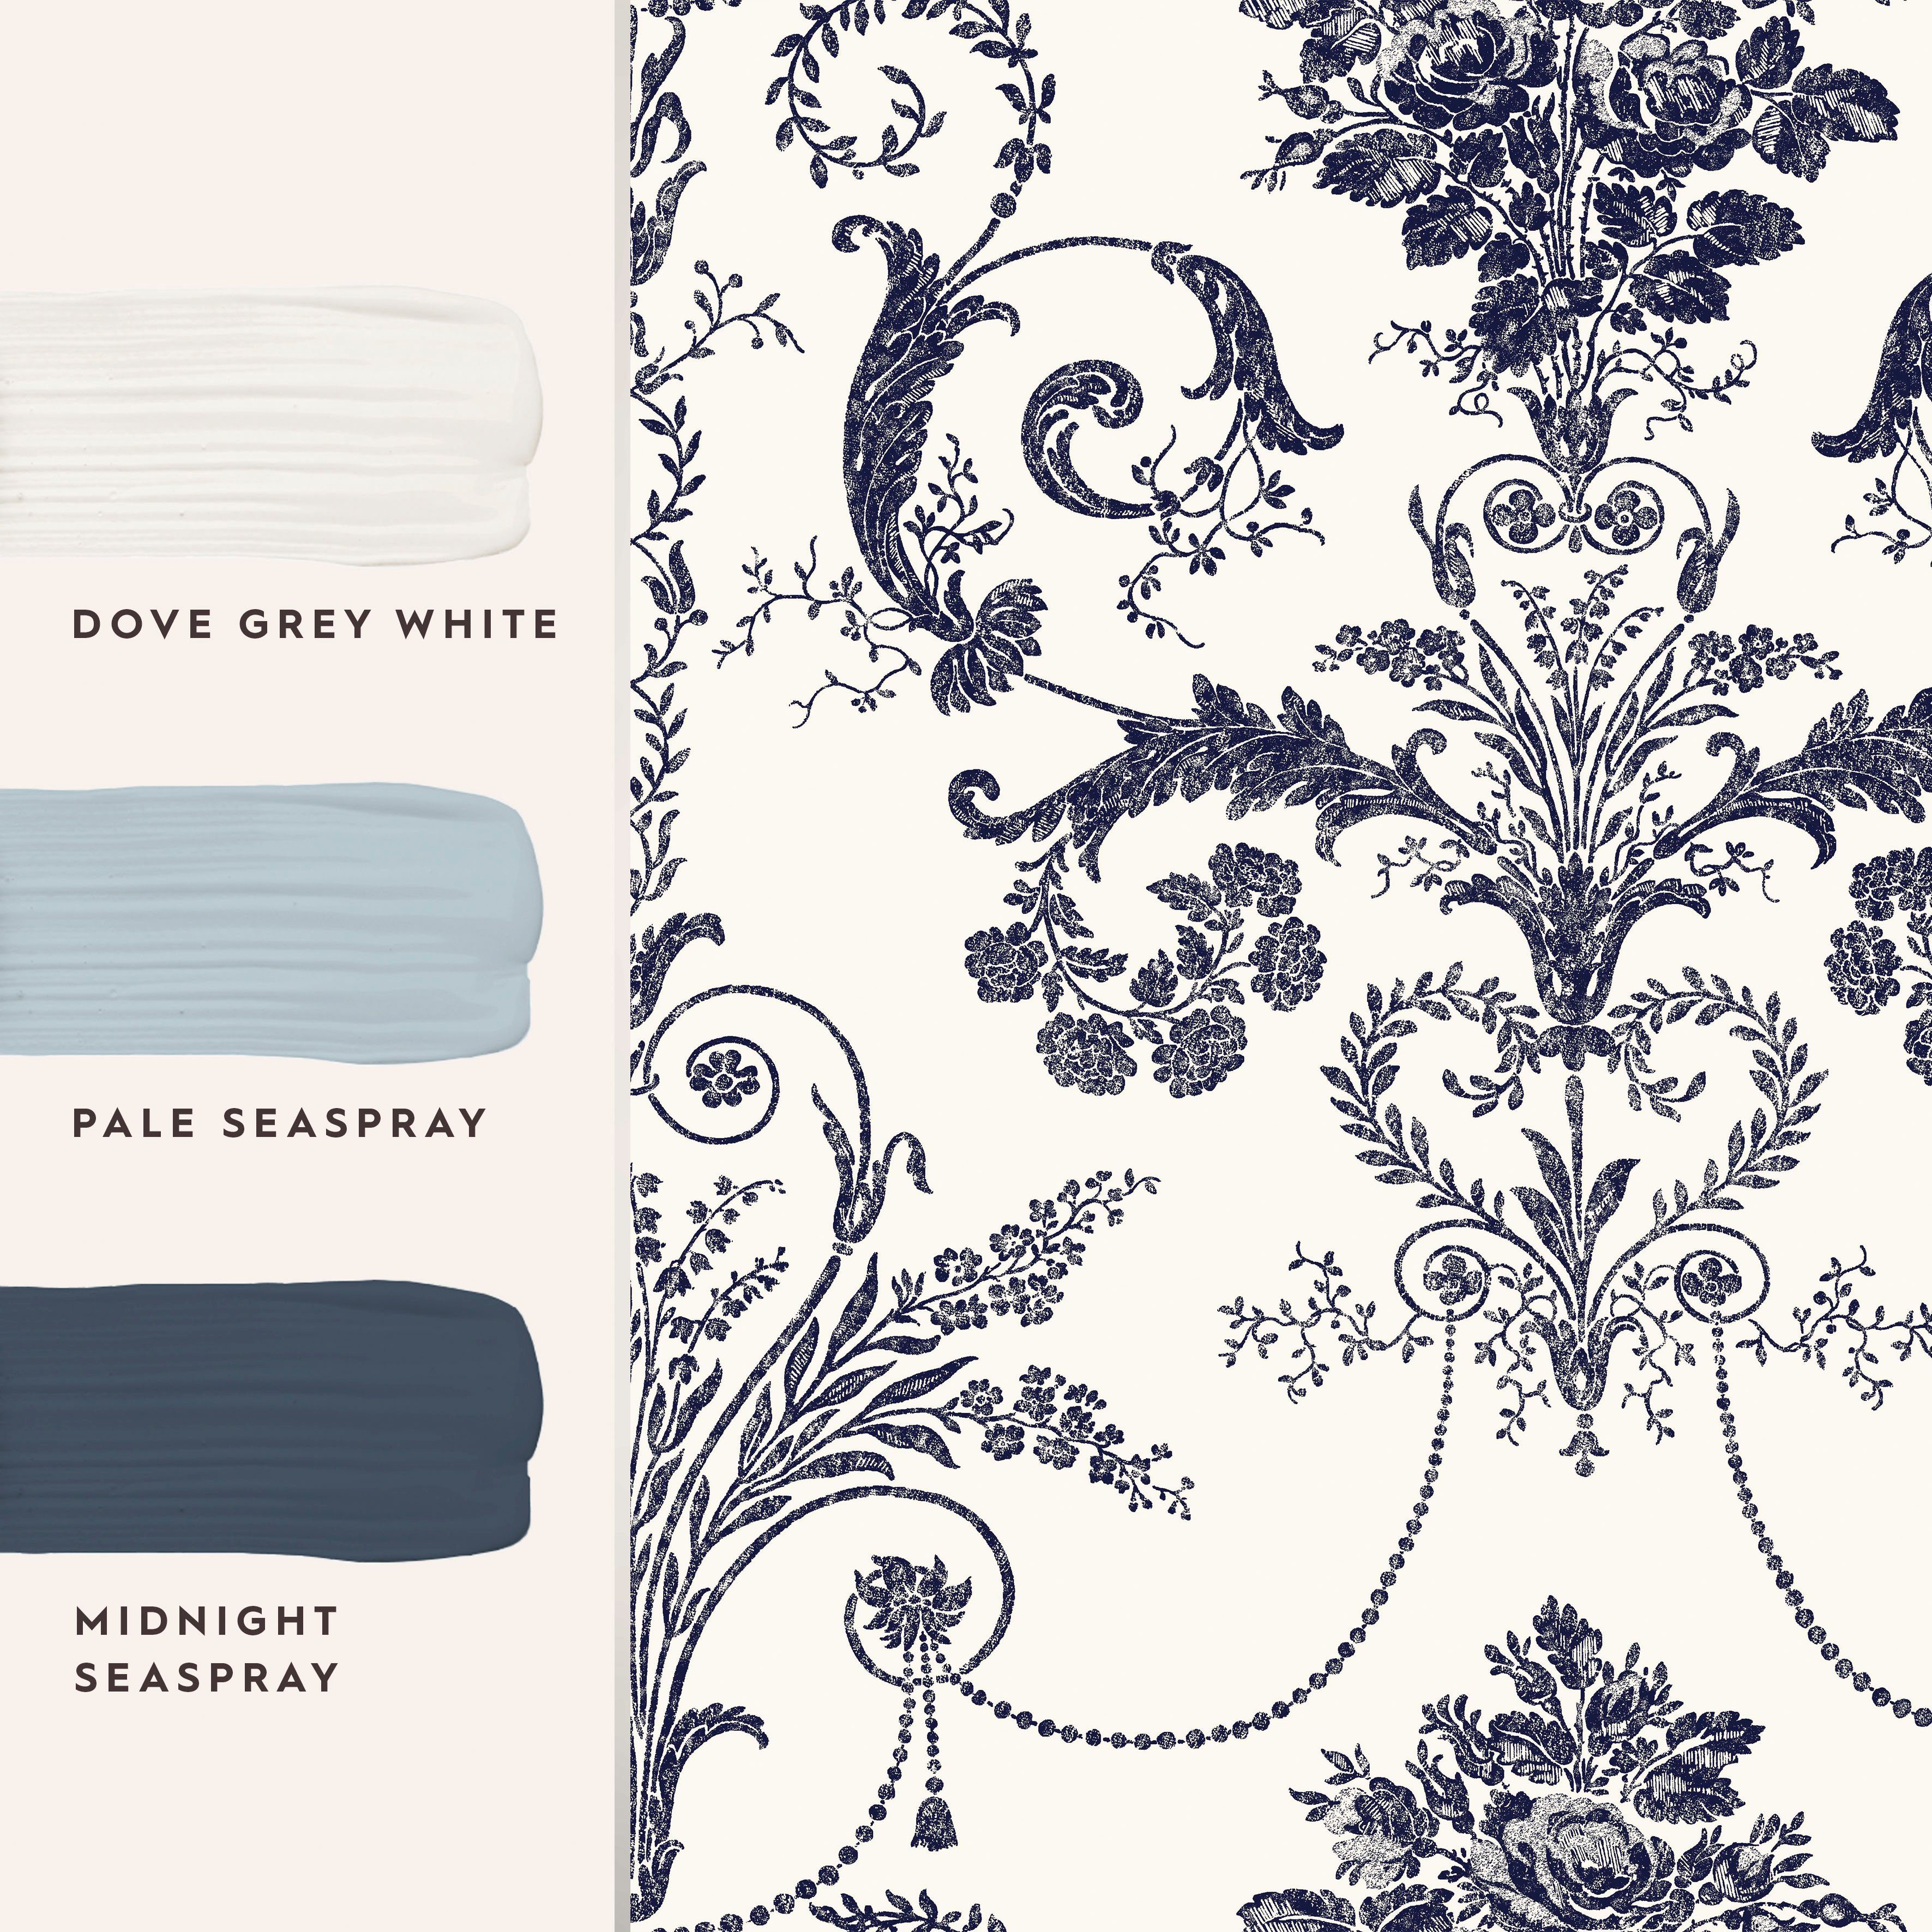 Dove Grey grey L ASHLEY 2,5 Fine matt, Wandfarbe Quality Paint White EMULSION MATT LAURA shades,